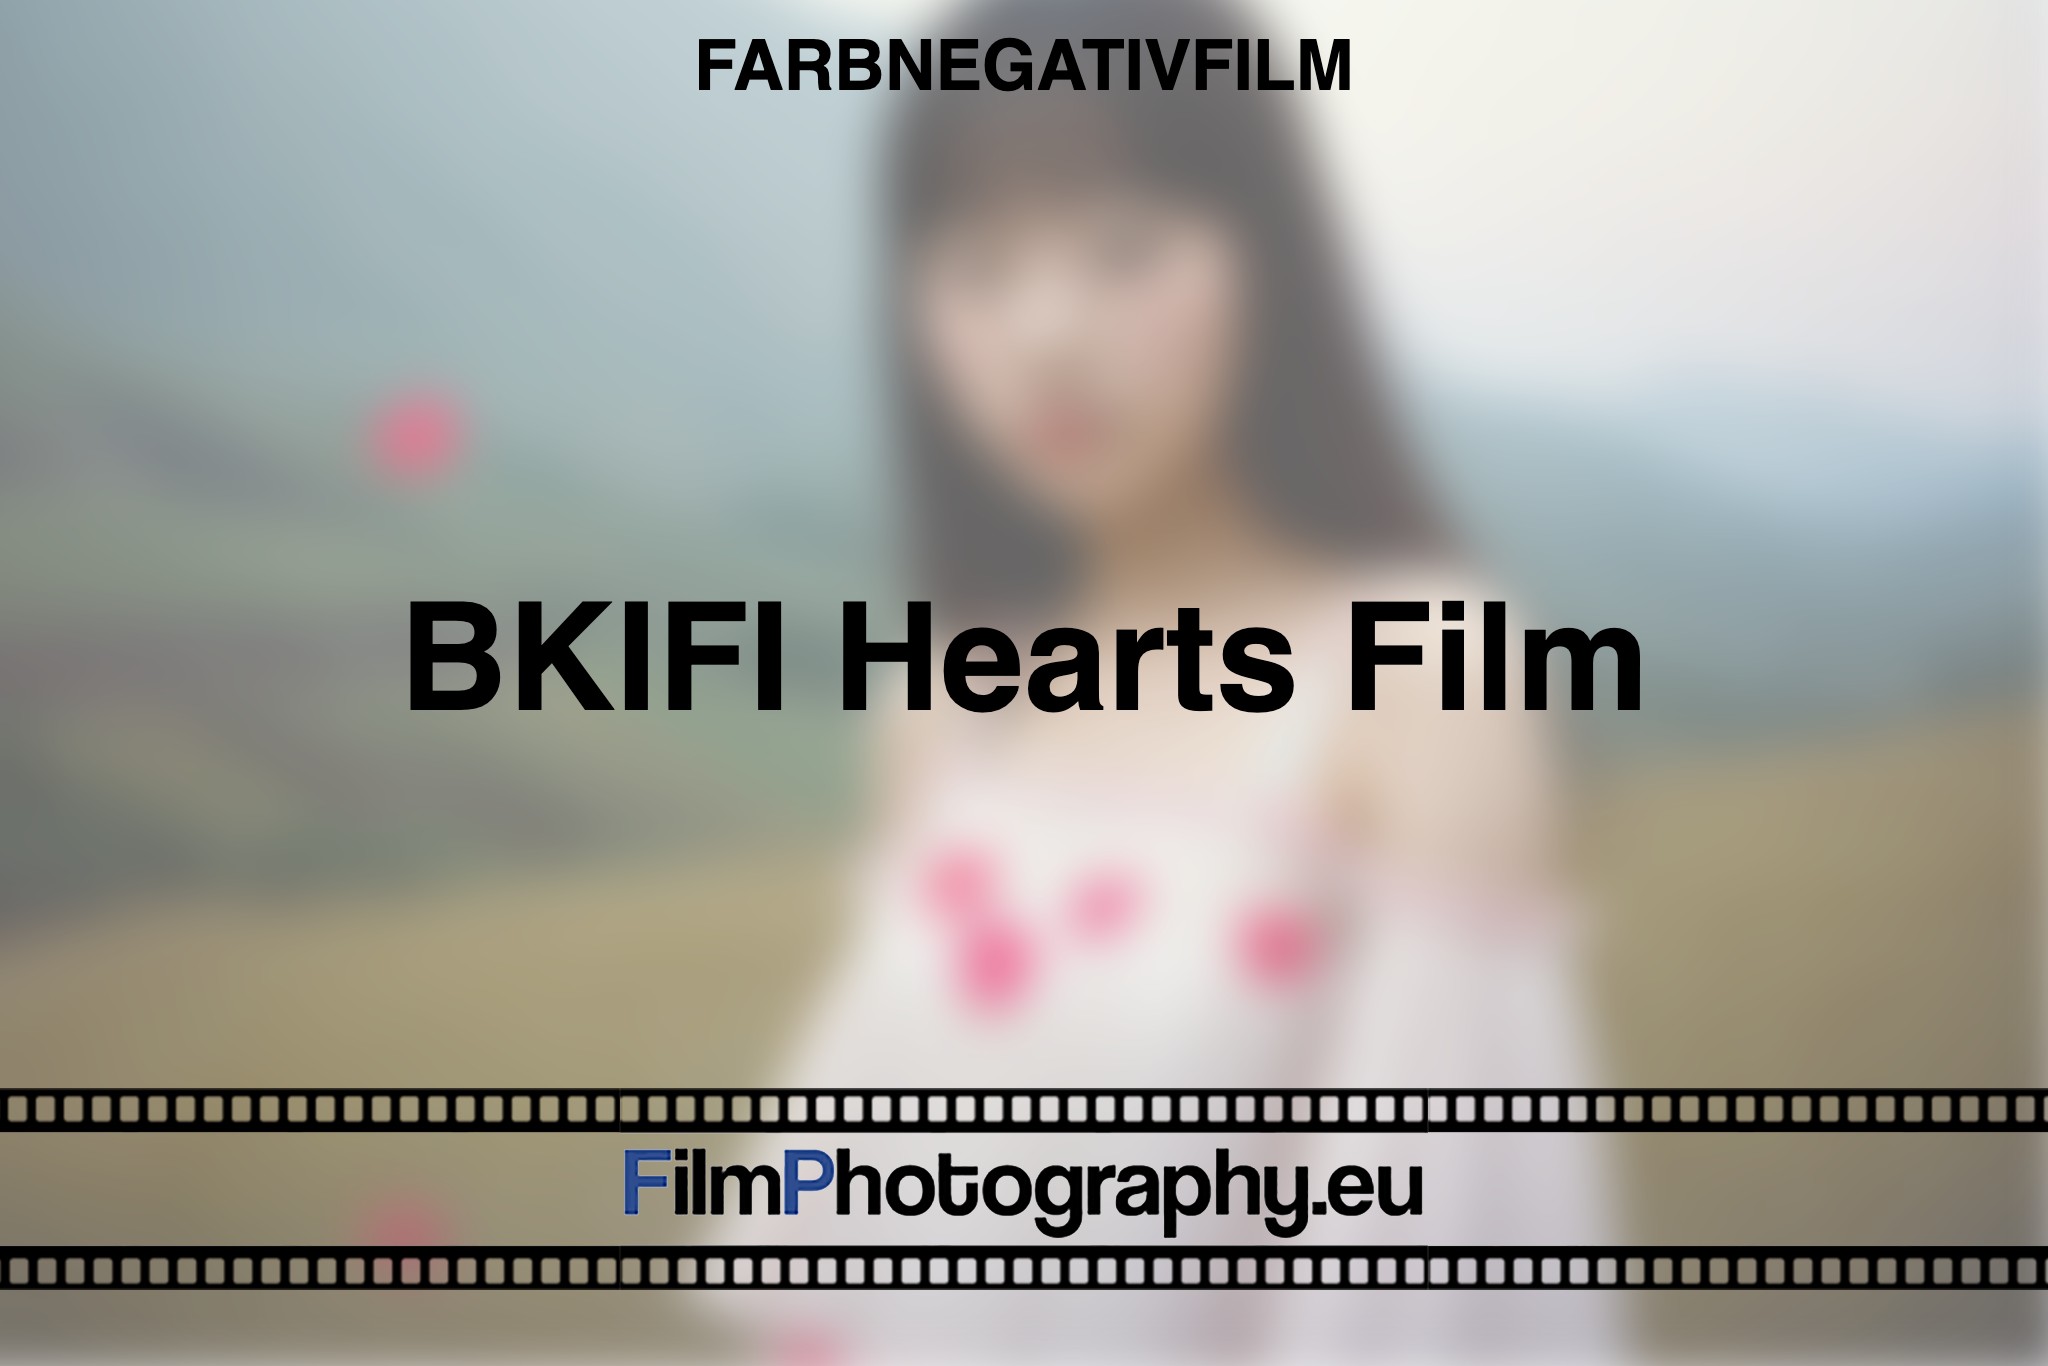 BKIFI-Hearts-Film-Farbnegativfilm-bnv